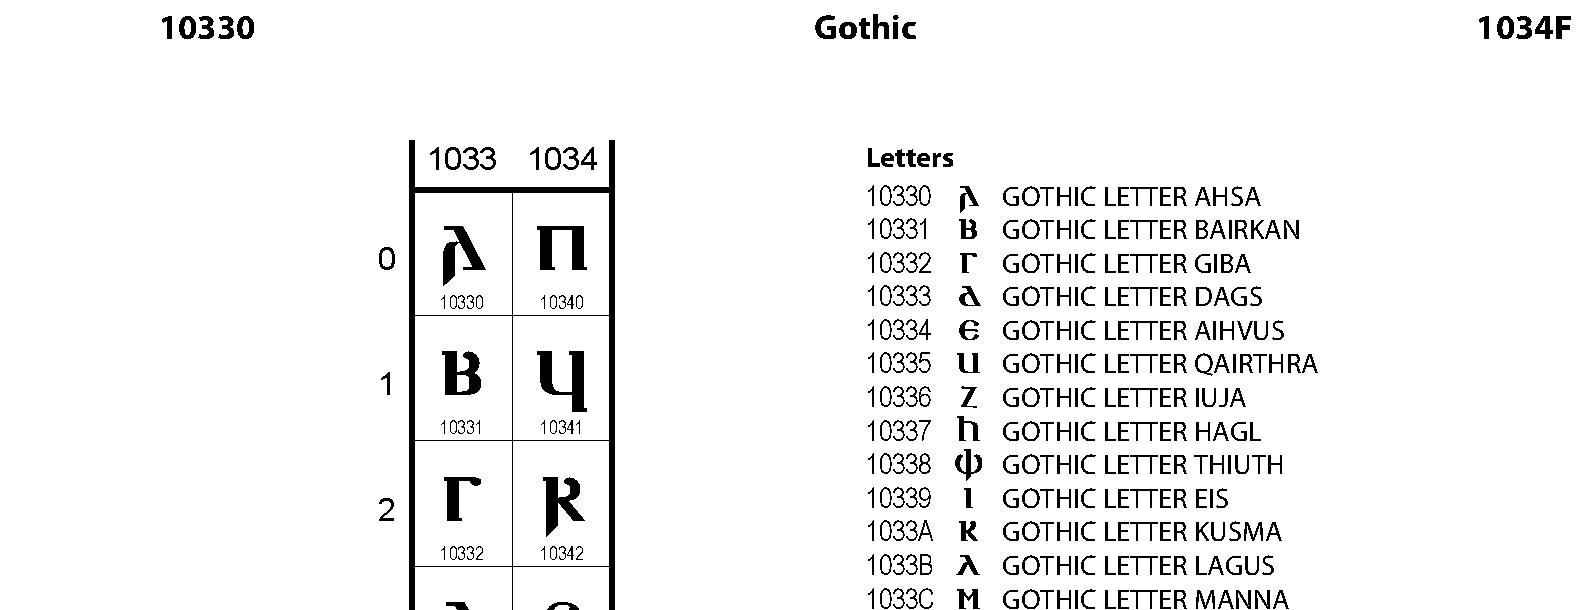 Unicode - Gothic